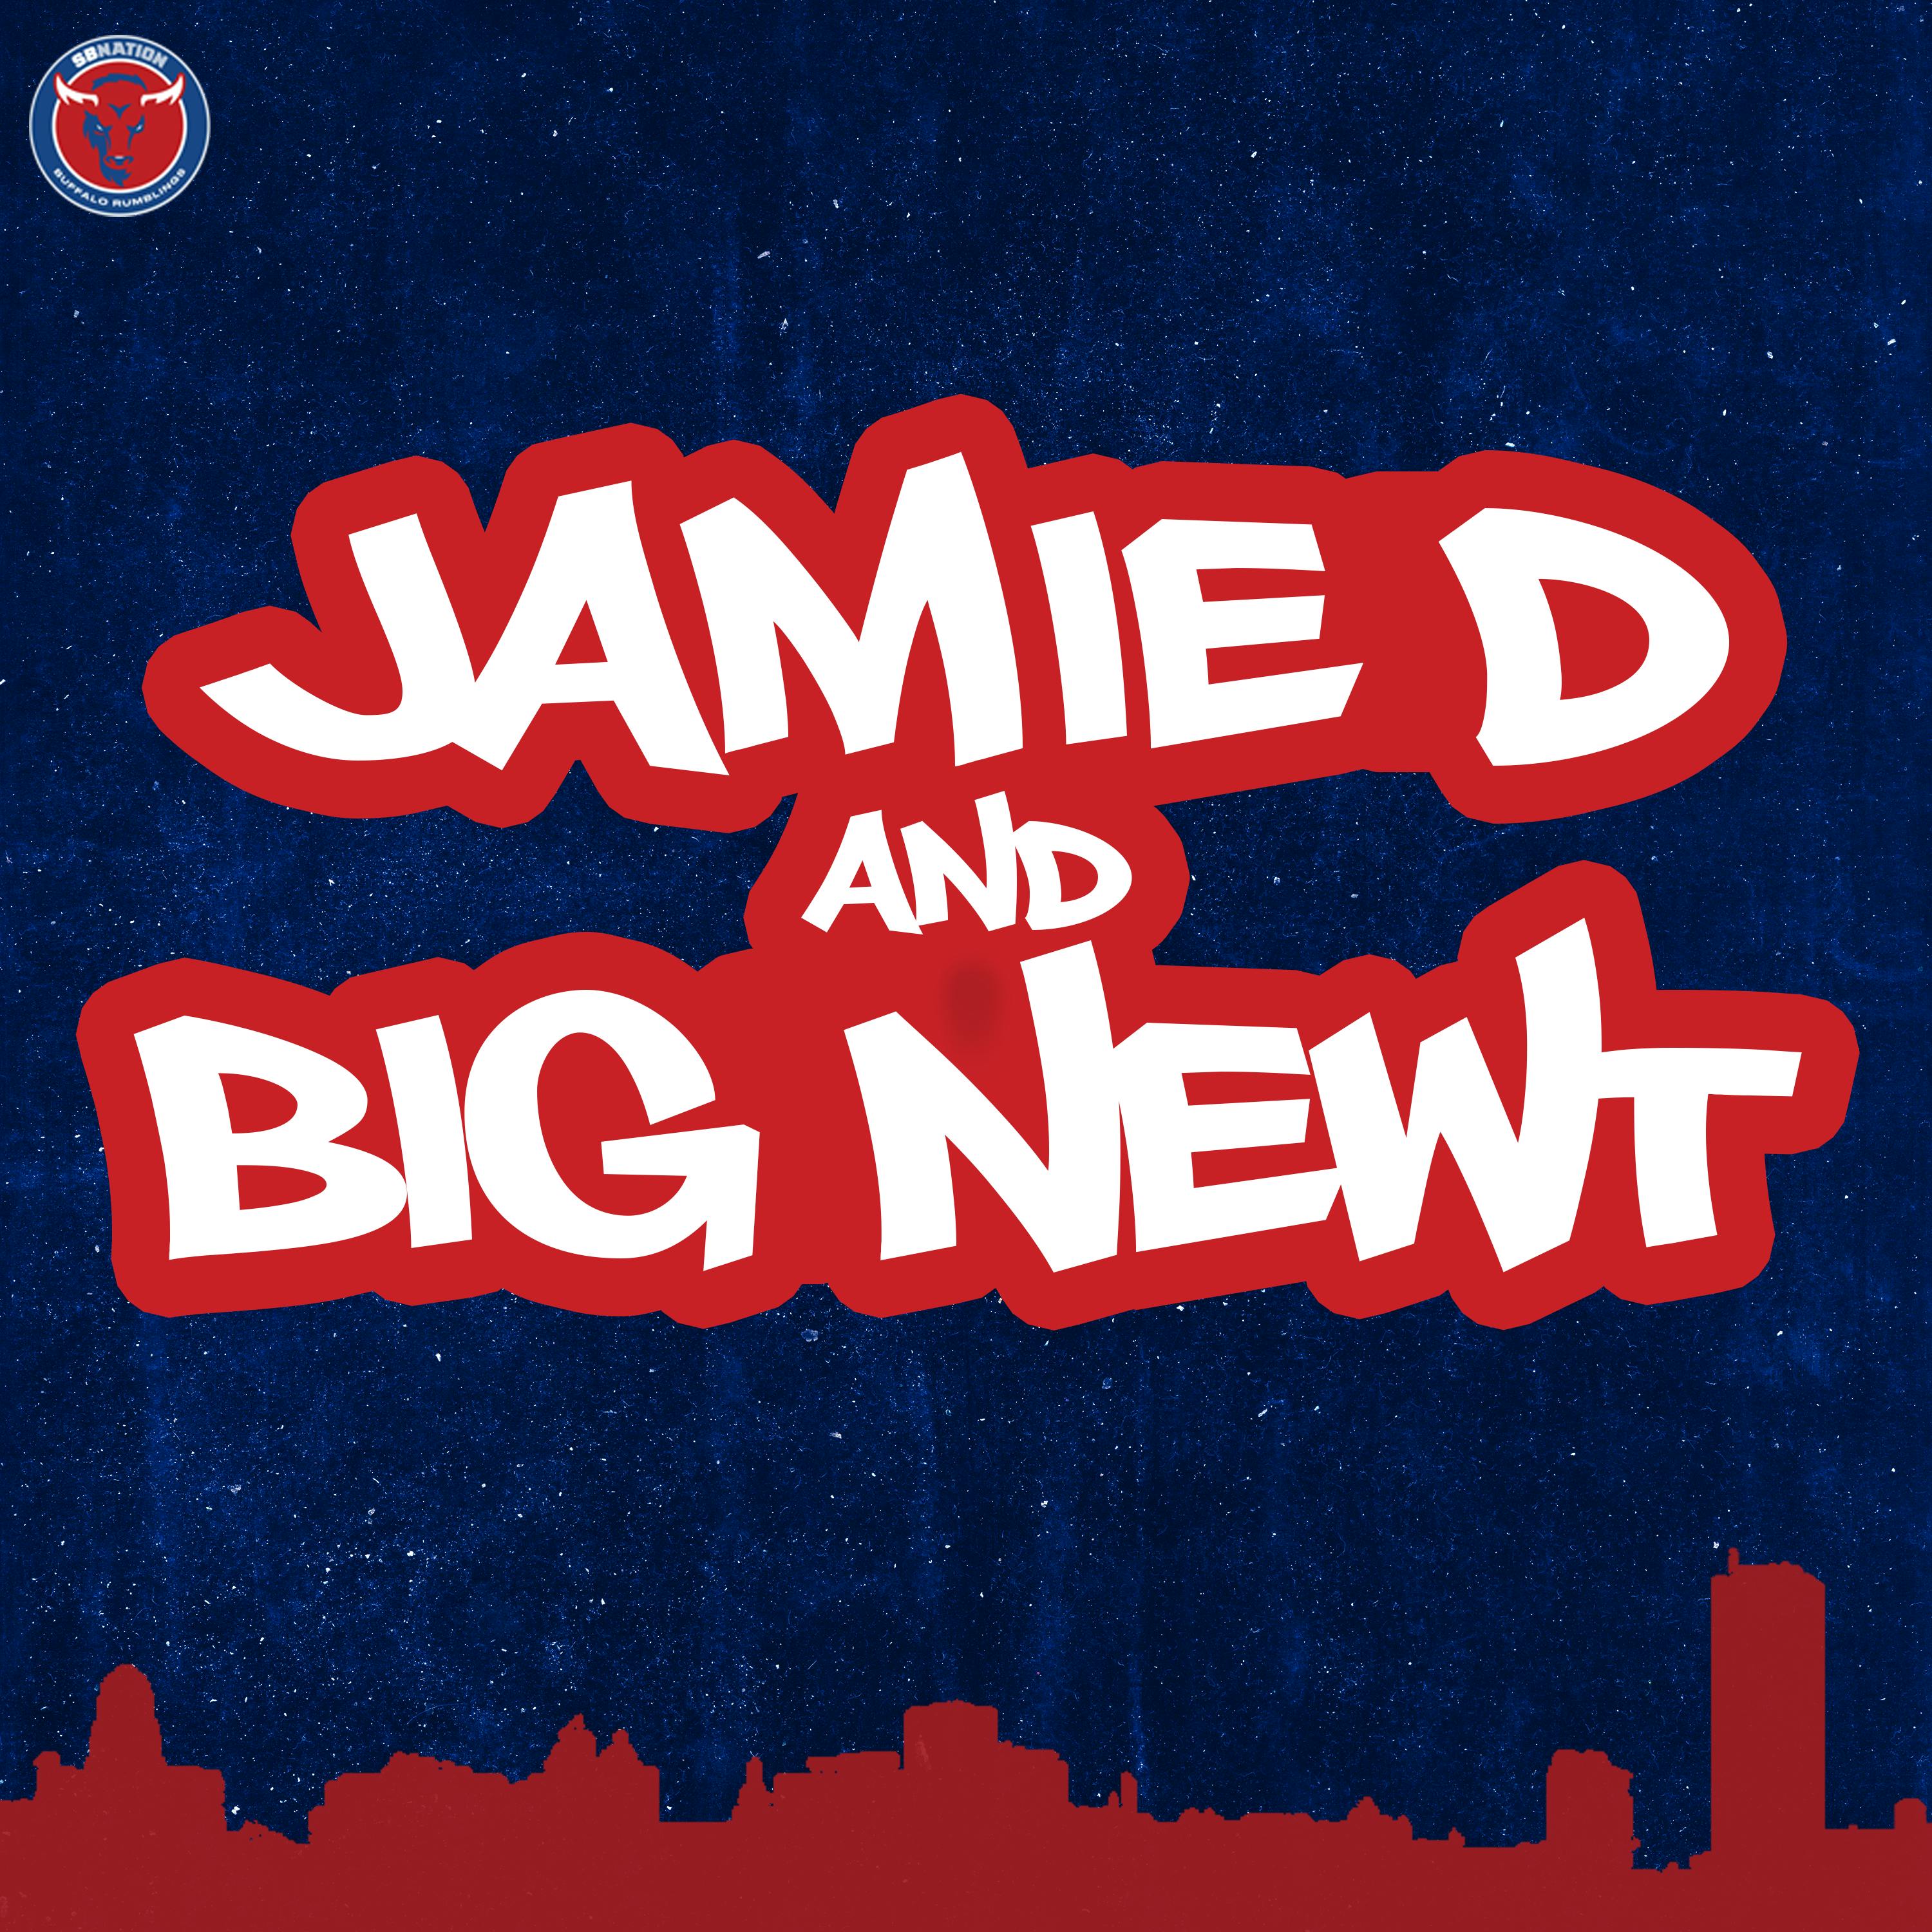 Jamie D & Big Newt: Stefon Diggs drama and more